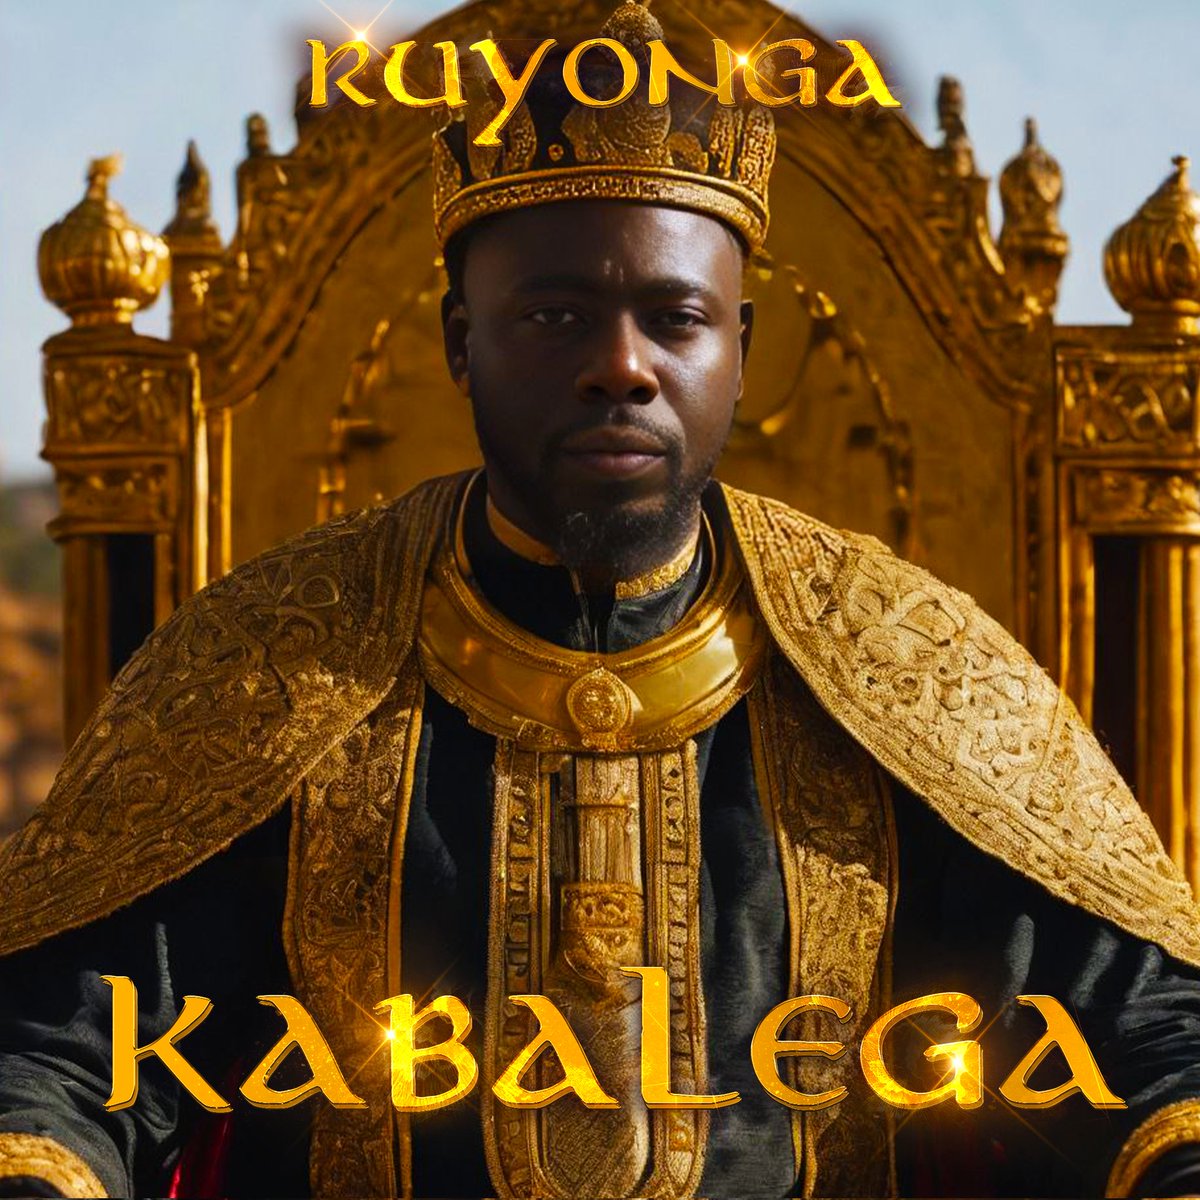 Pre order the Classic now; #Kabalega #KabalegaSzn #Kabalega240524 keleledigital.ffm.to/ruyongakabalega